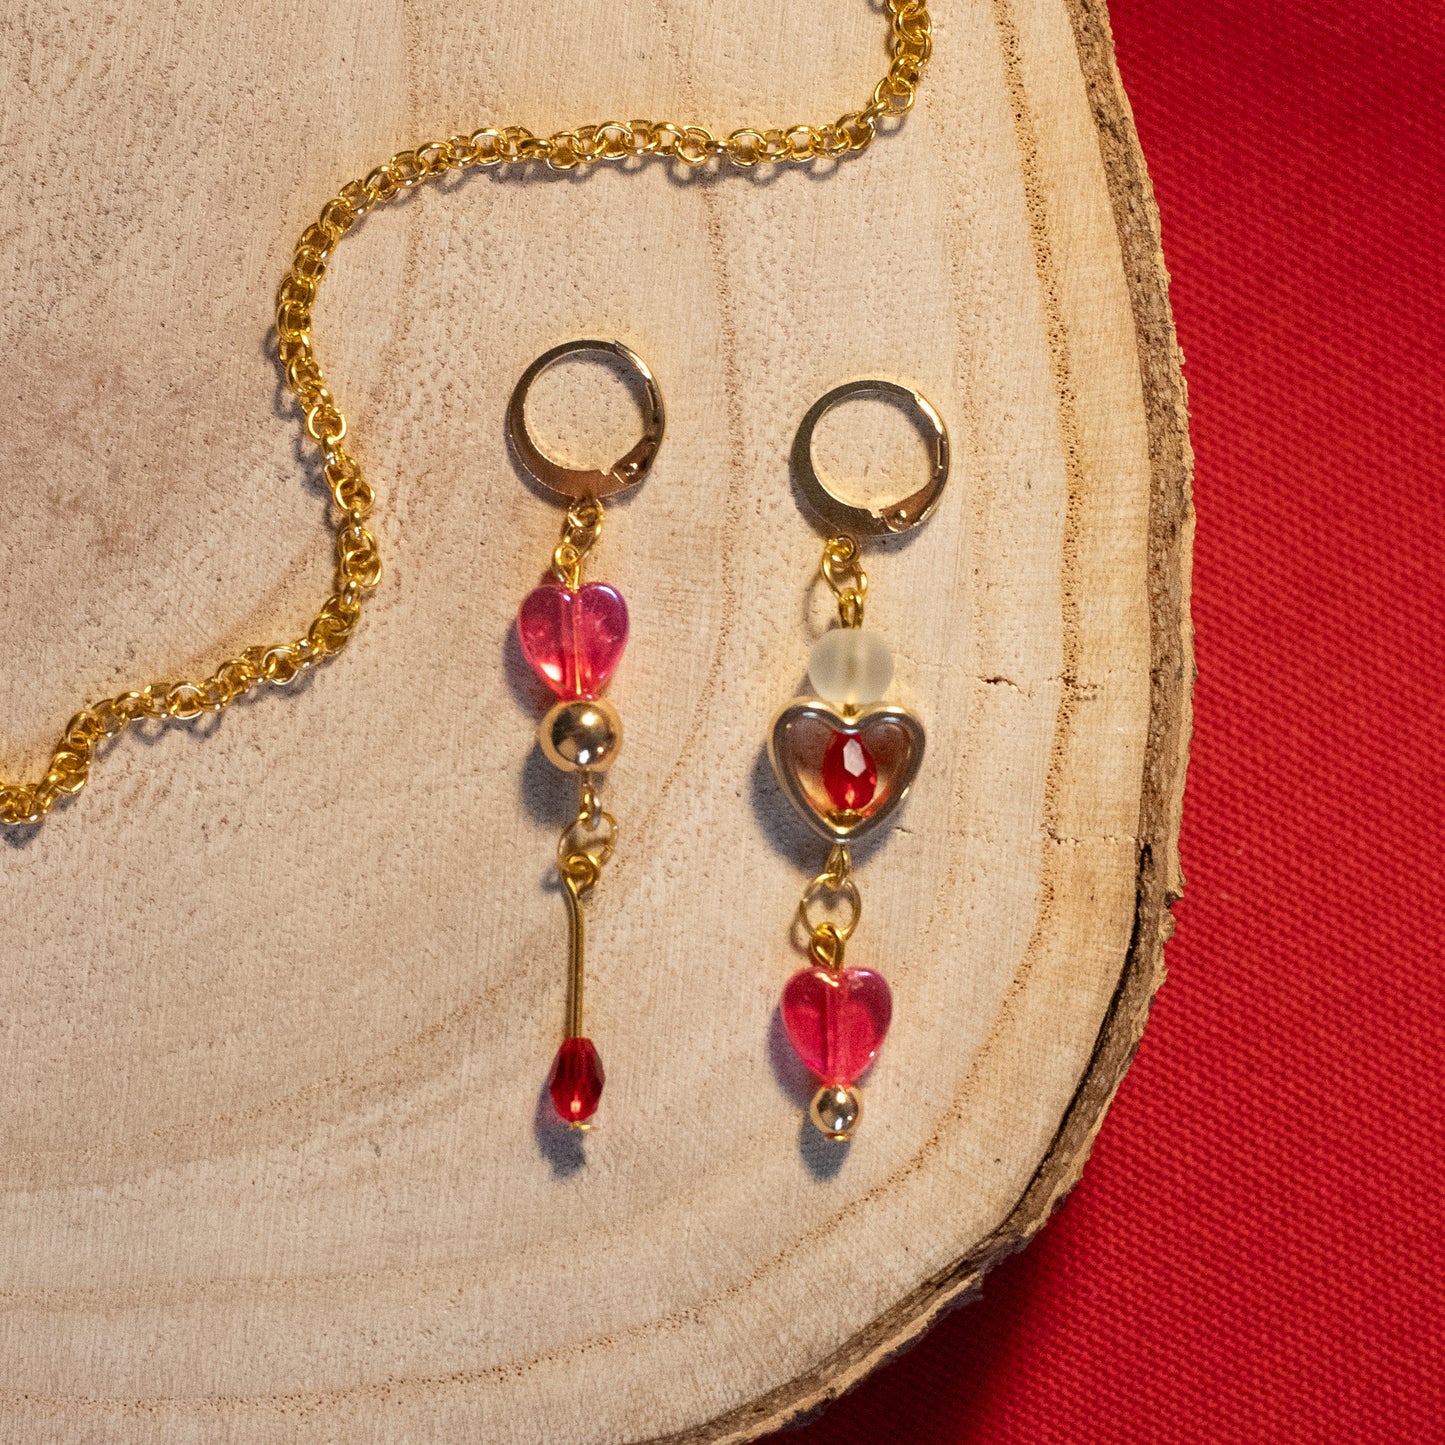 Valentino Hazbin Hotel inspired earrings l anime jewelry